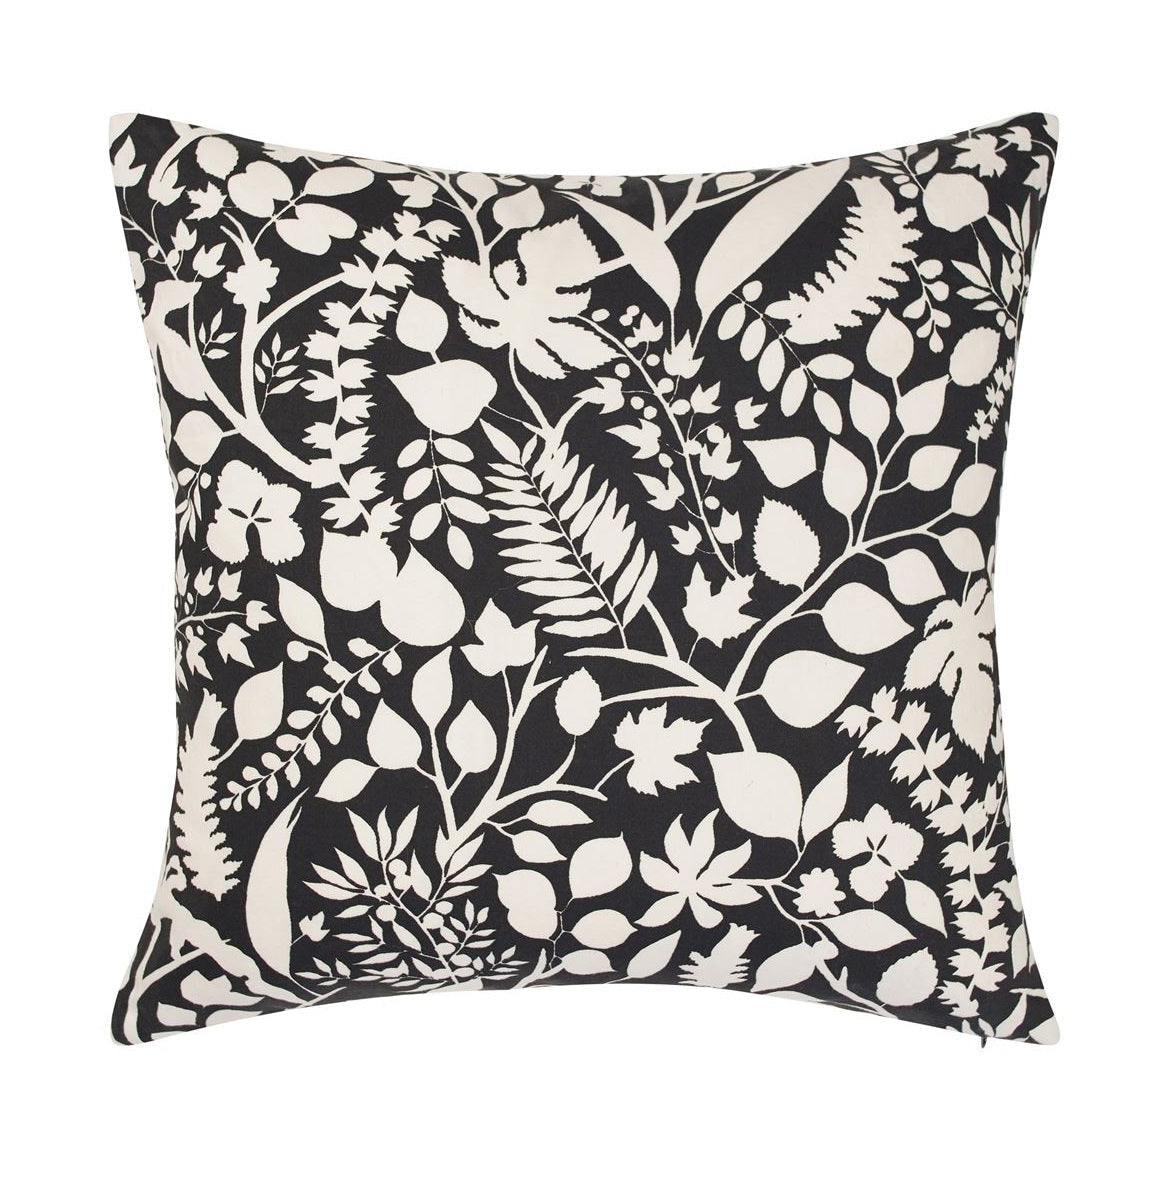 Double-sided pillow DAME NATURE PRINTEMPS cotton satin - Eye on Design